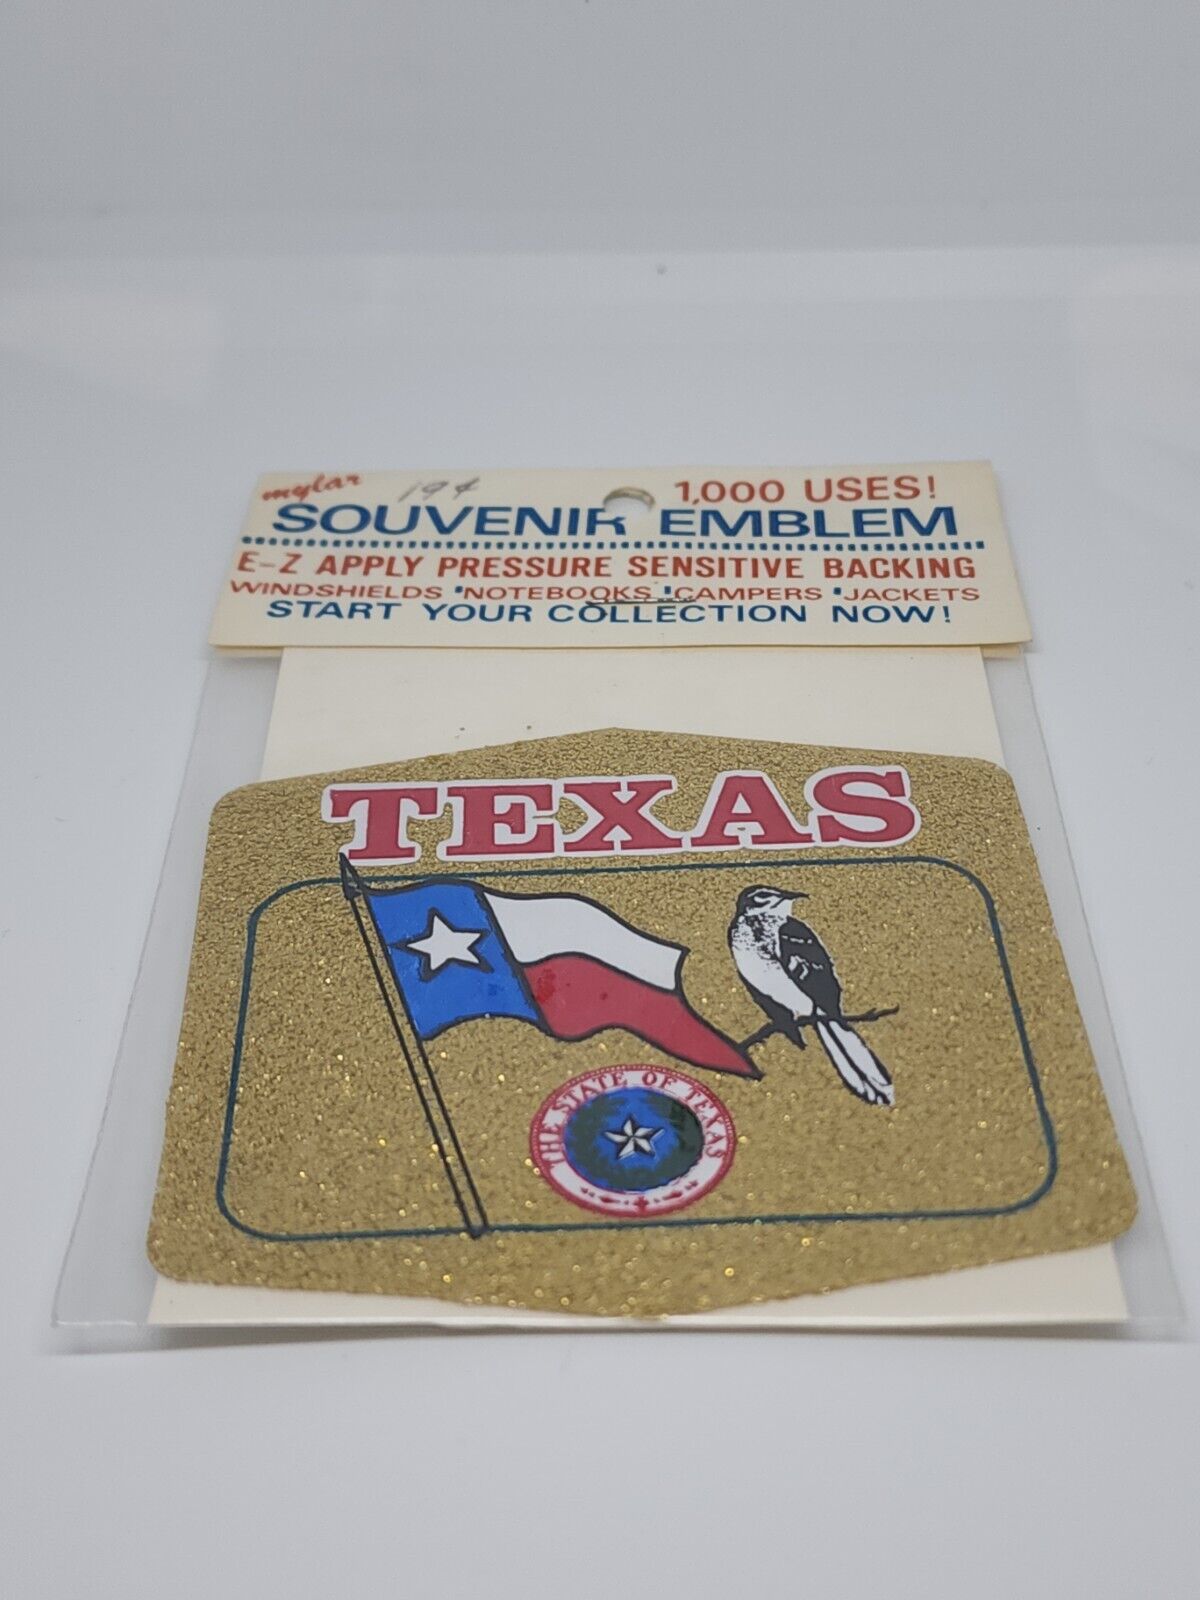 Vintage Texas Travel Souvenir Emblem Sticker luggage Collectible 